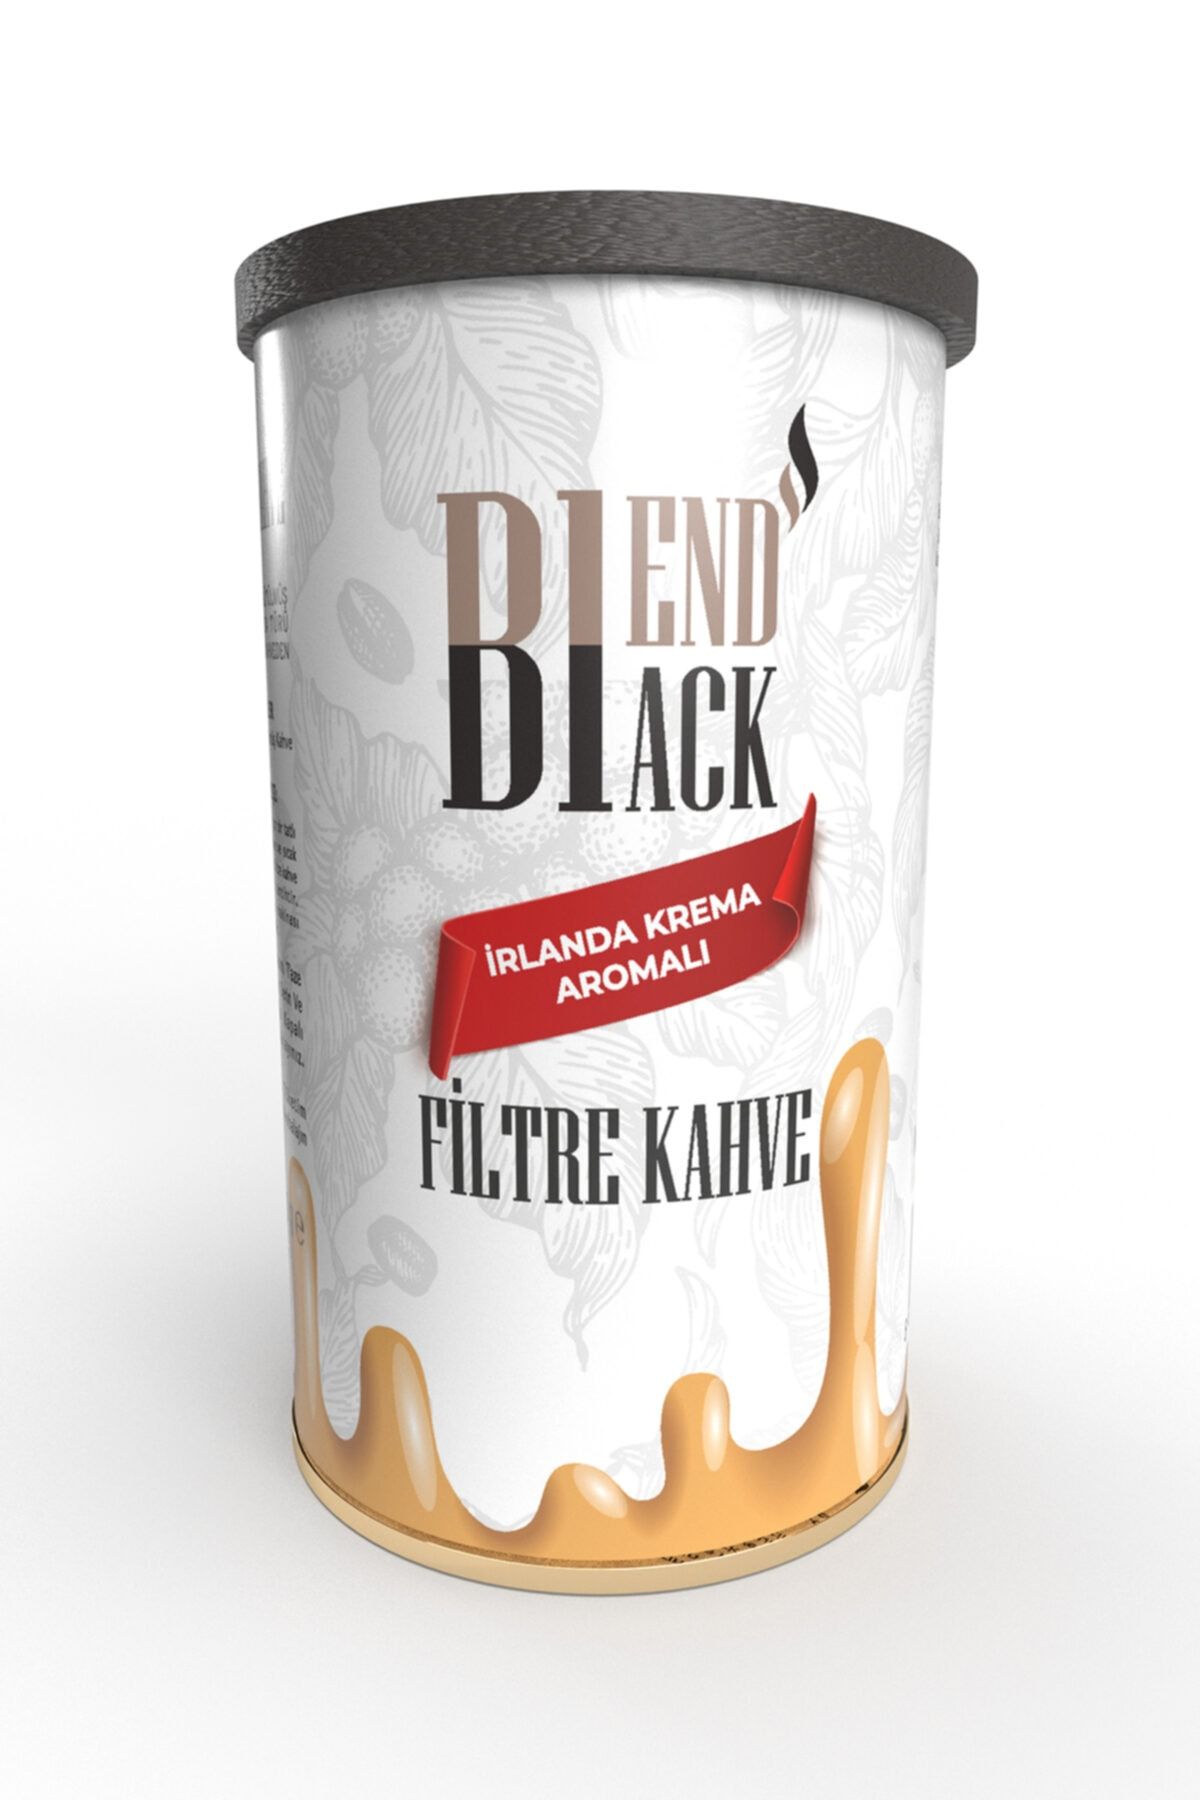 Blendblack Filtre Kahve Irlanda Krema Aromalı 250gr Teneke Kutu